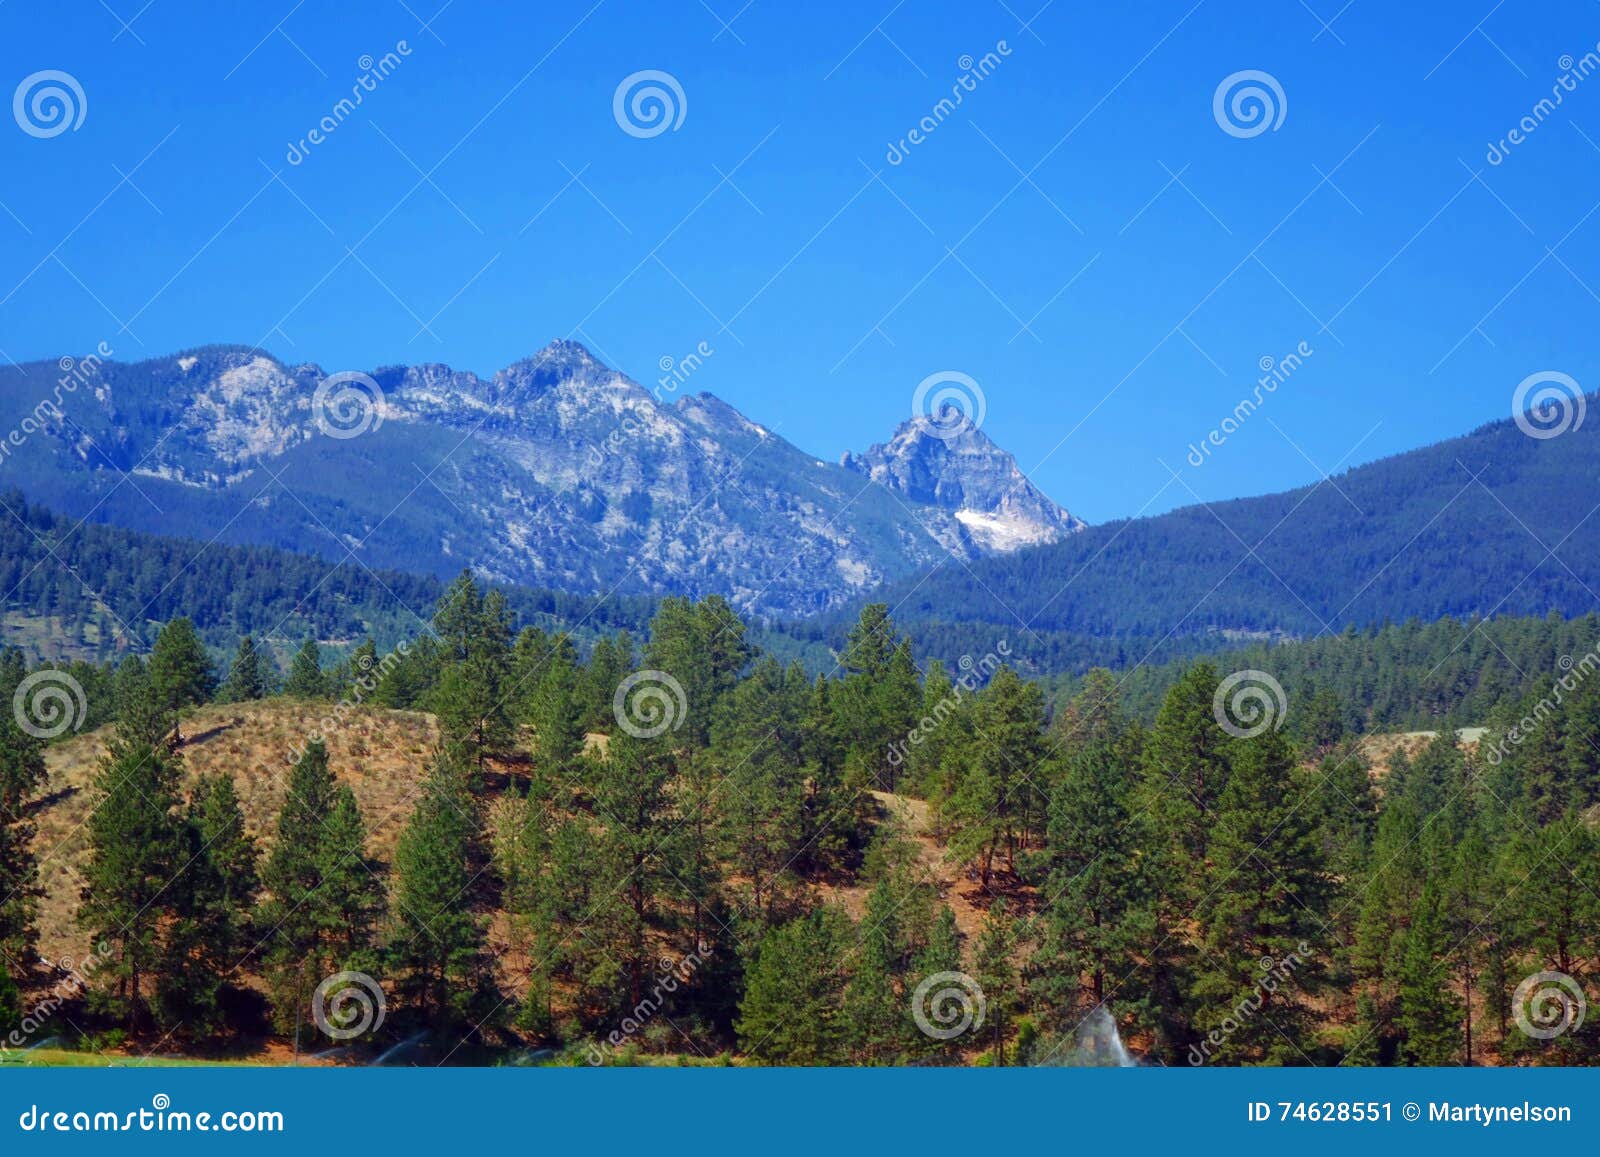 bitterroot mountains near darby, montana